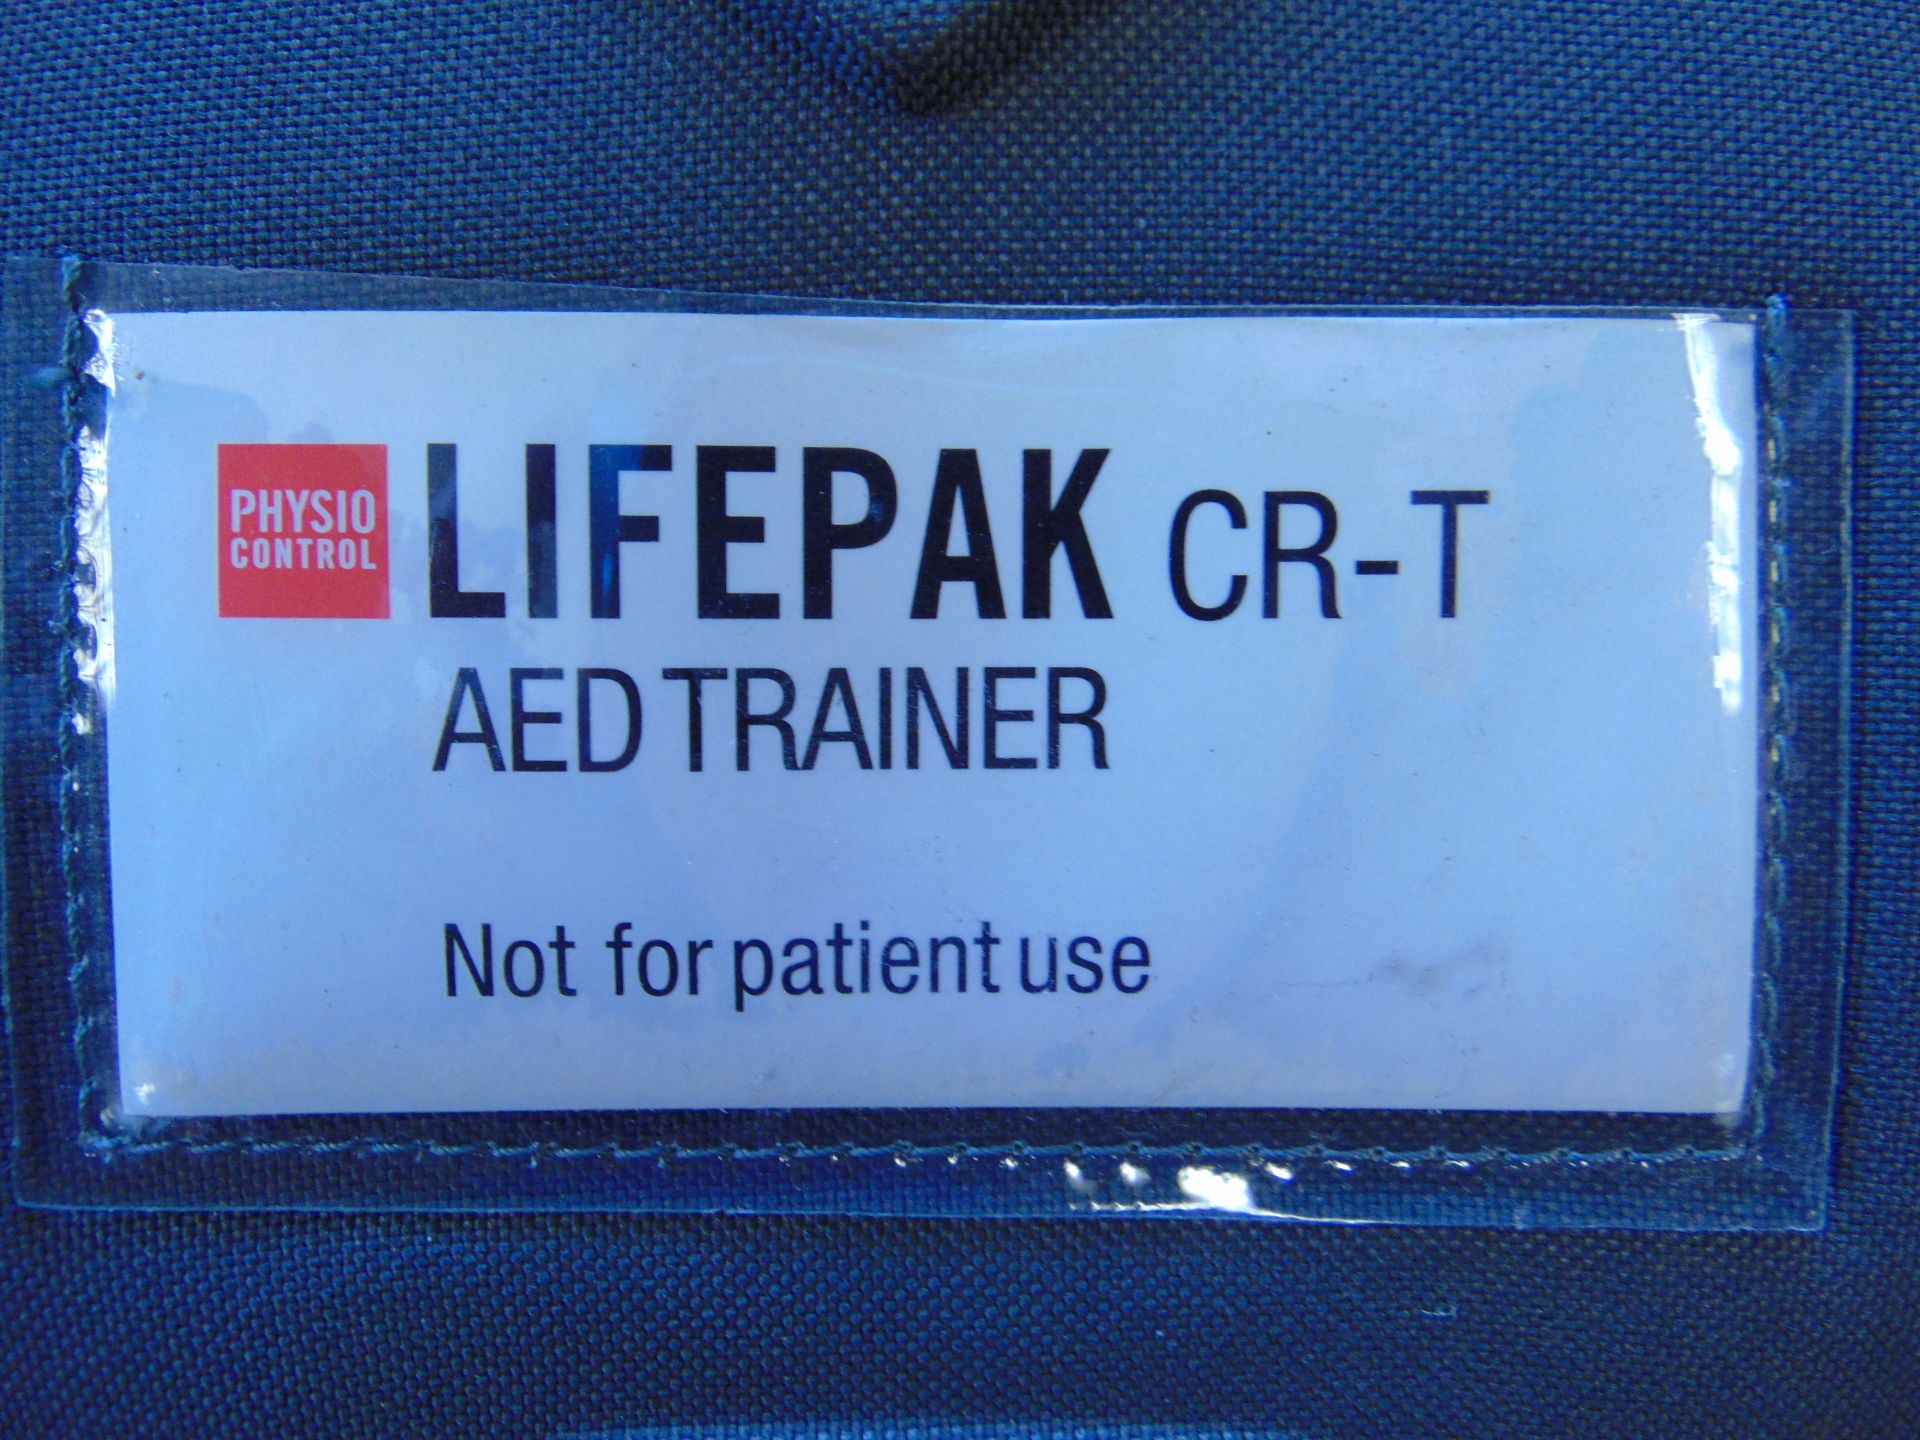 2 x Physio Controls Lifepak CR-T Defibrillator AED Trainer Unit in Carry Case - Image 4 of 4